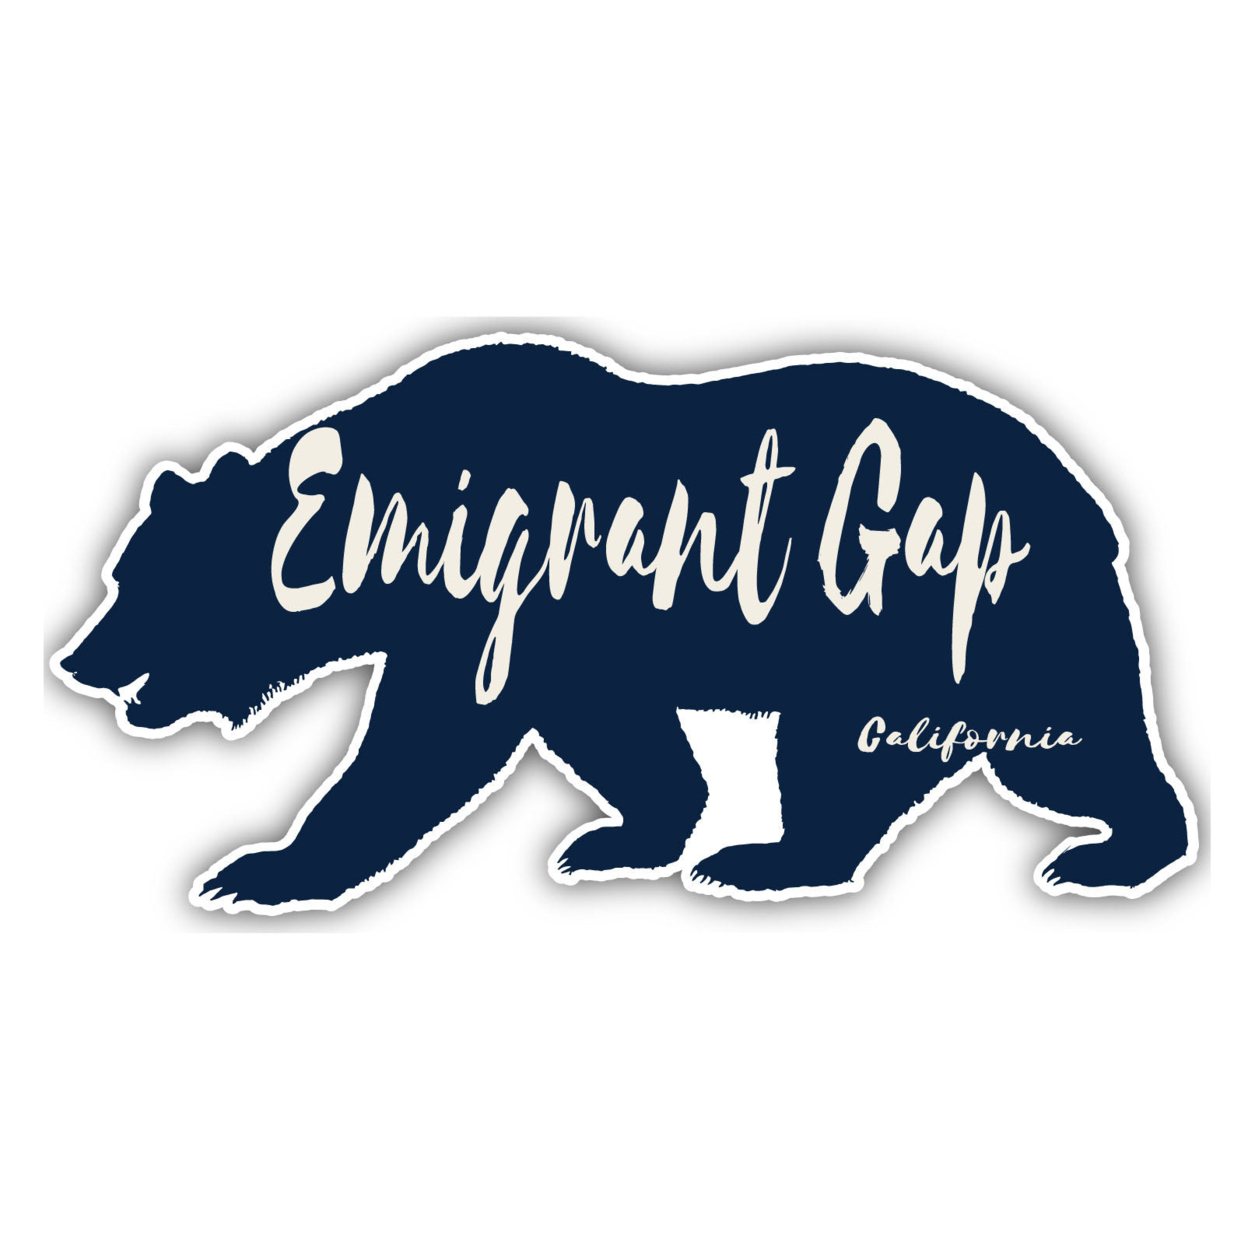 Emigrant Gap California Souvenir Decorative Stickers (Choose Theme And Size) - 4-Pack, 8-Inch, Bear